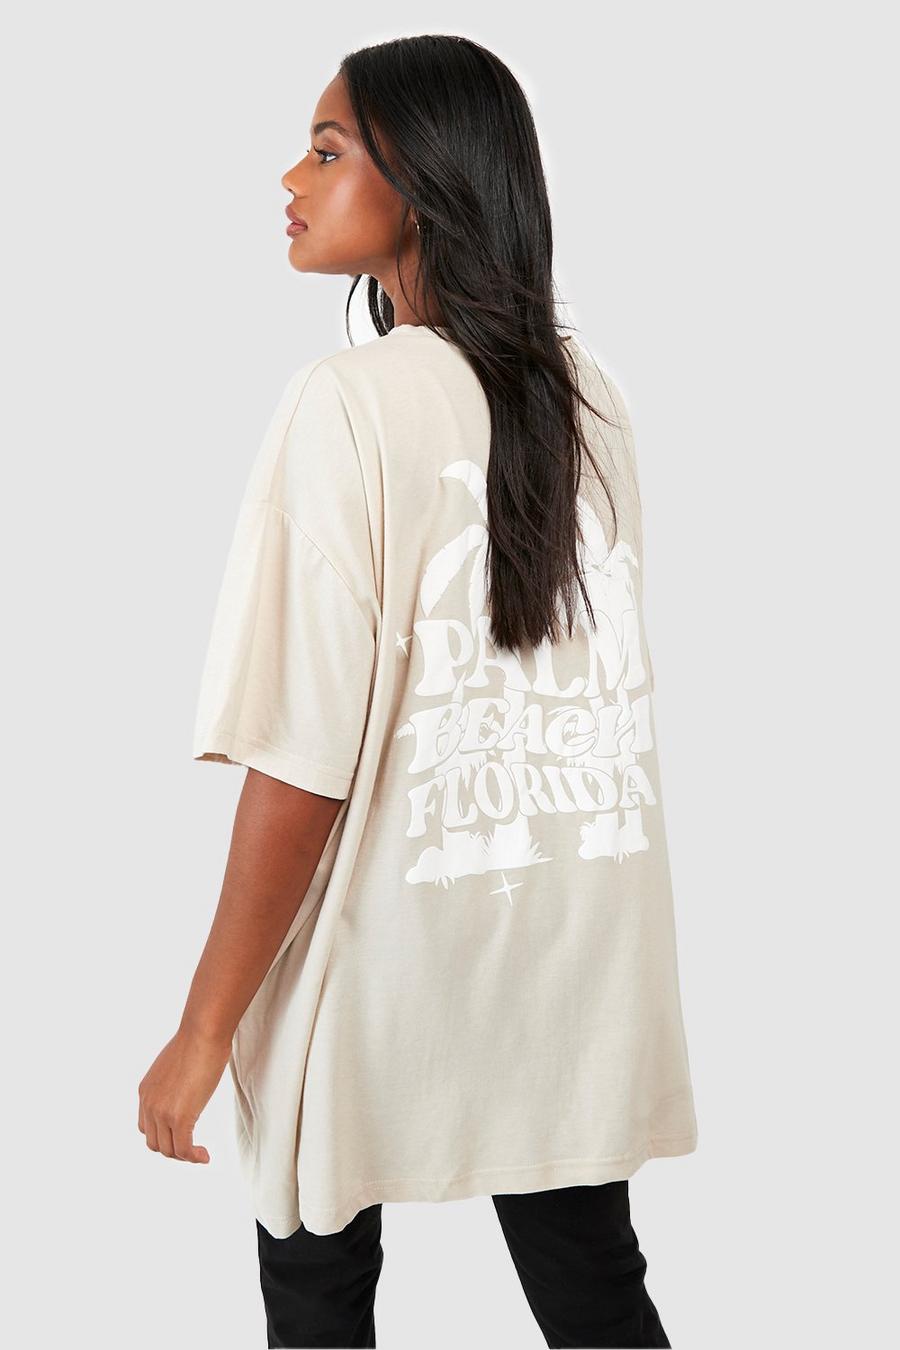 Big Fit Palm Beach Print T-Shirt by bonprix